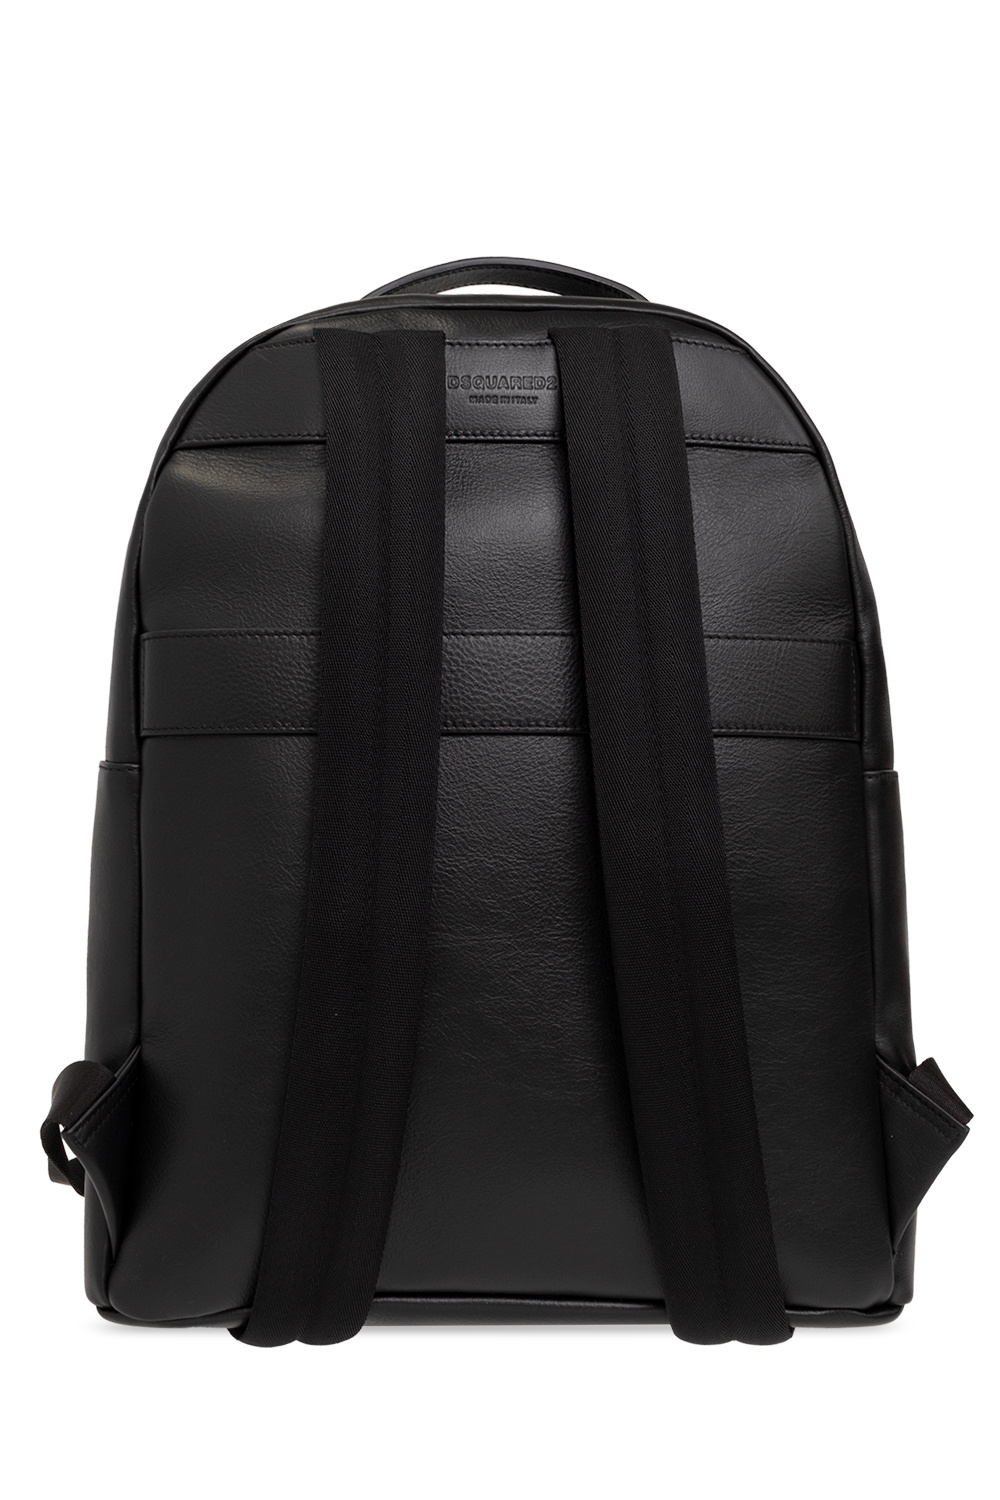 Dsquared2 ‘Bob’ backpack